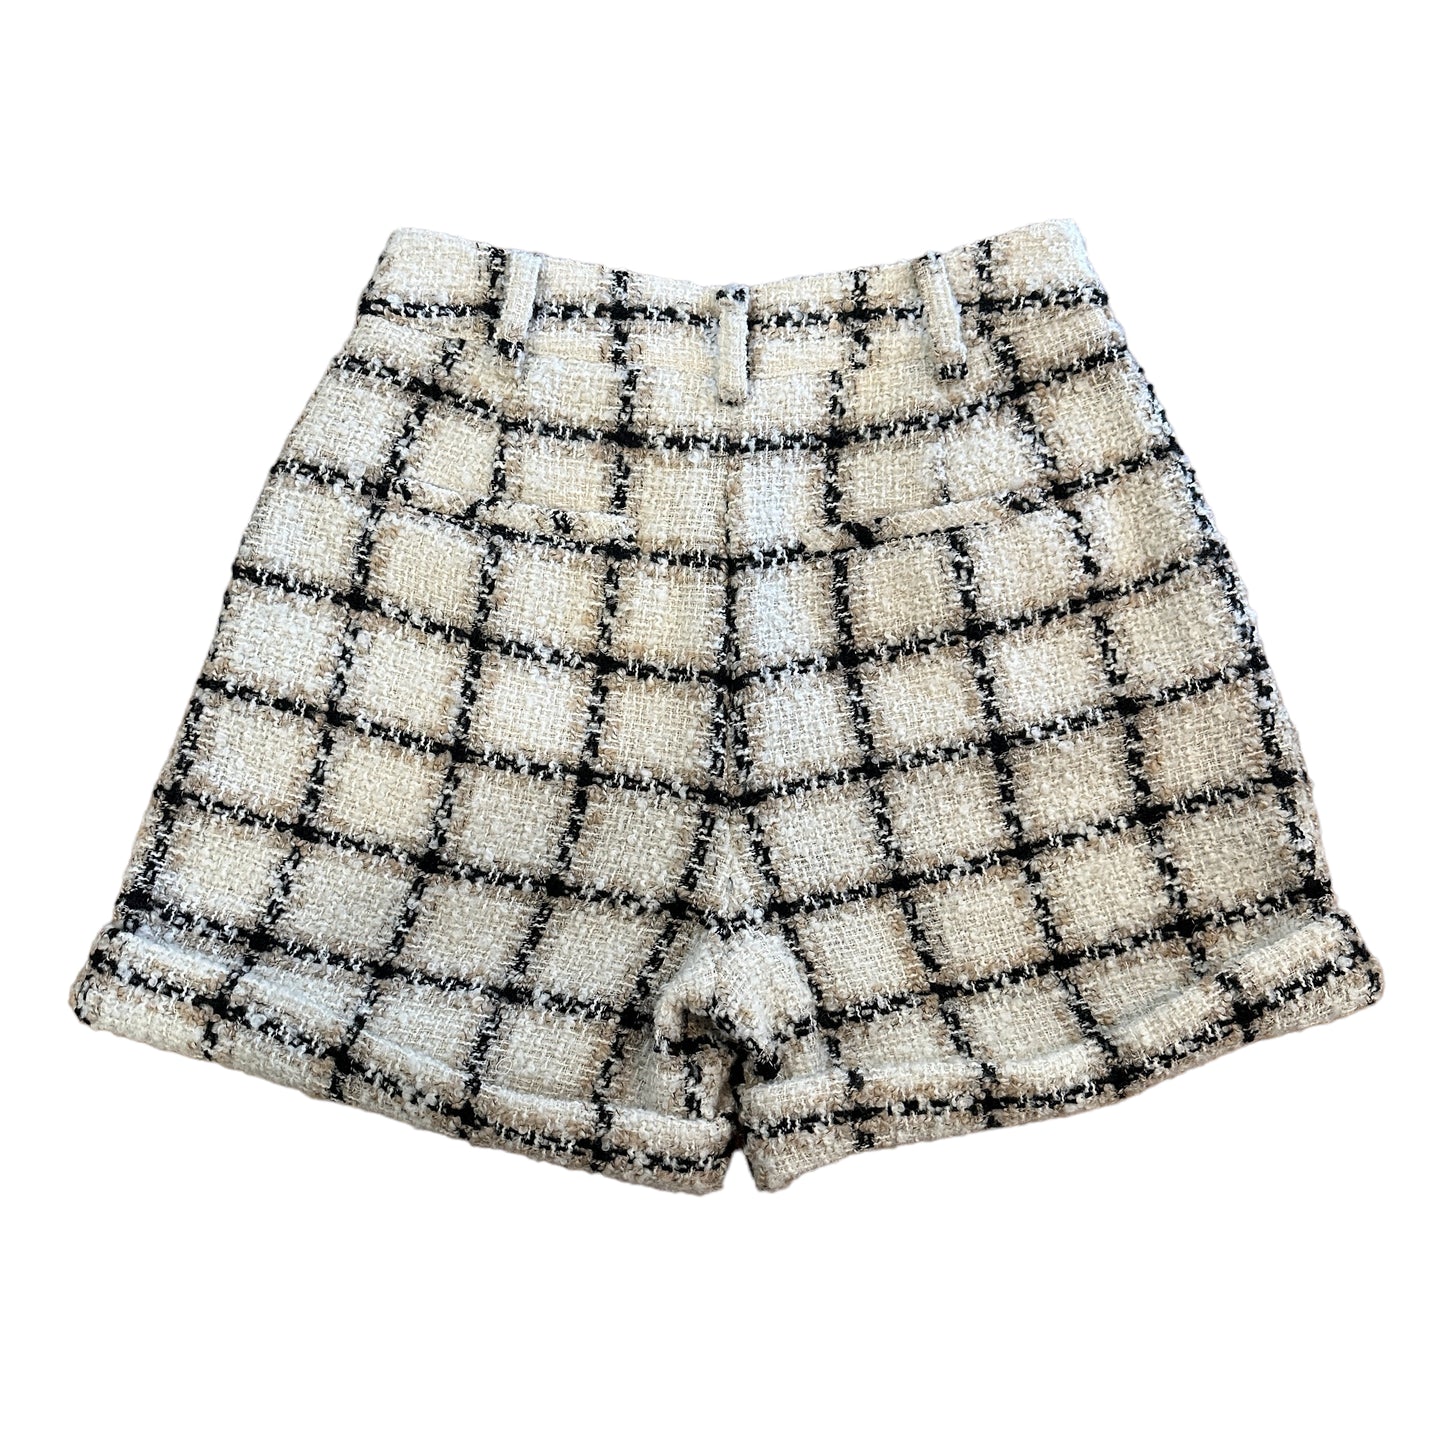 Tweed Mini Shorts NWT - XS